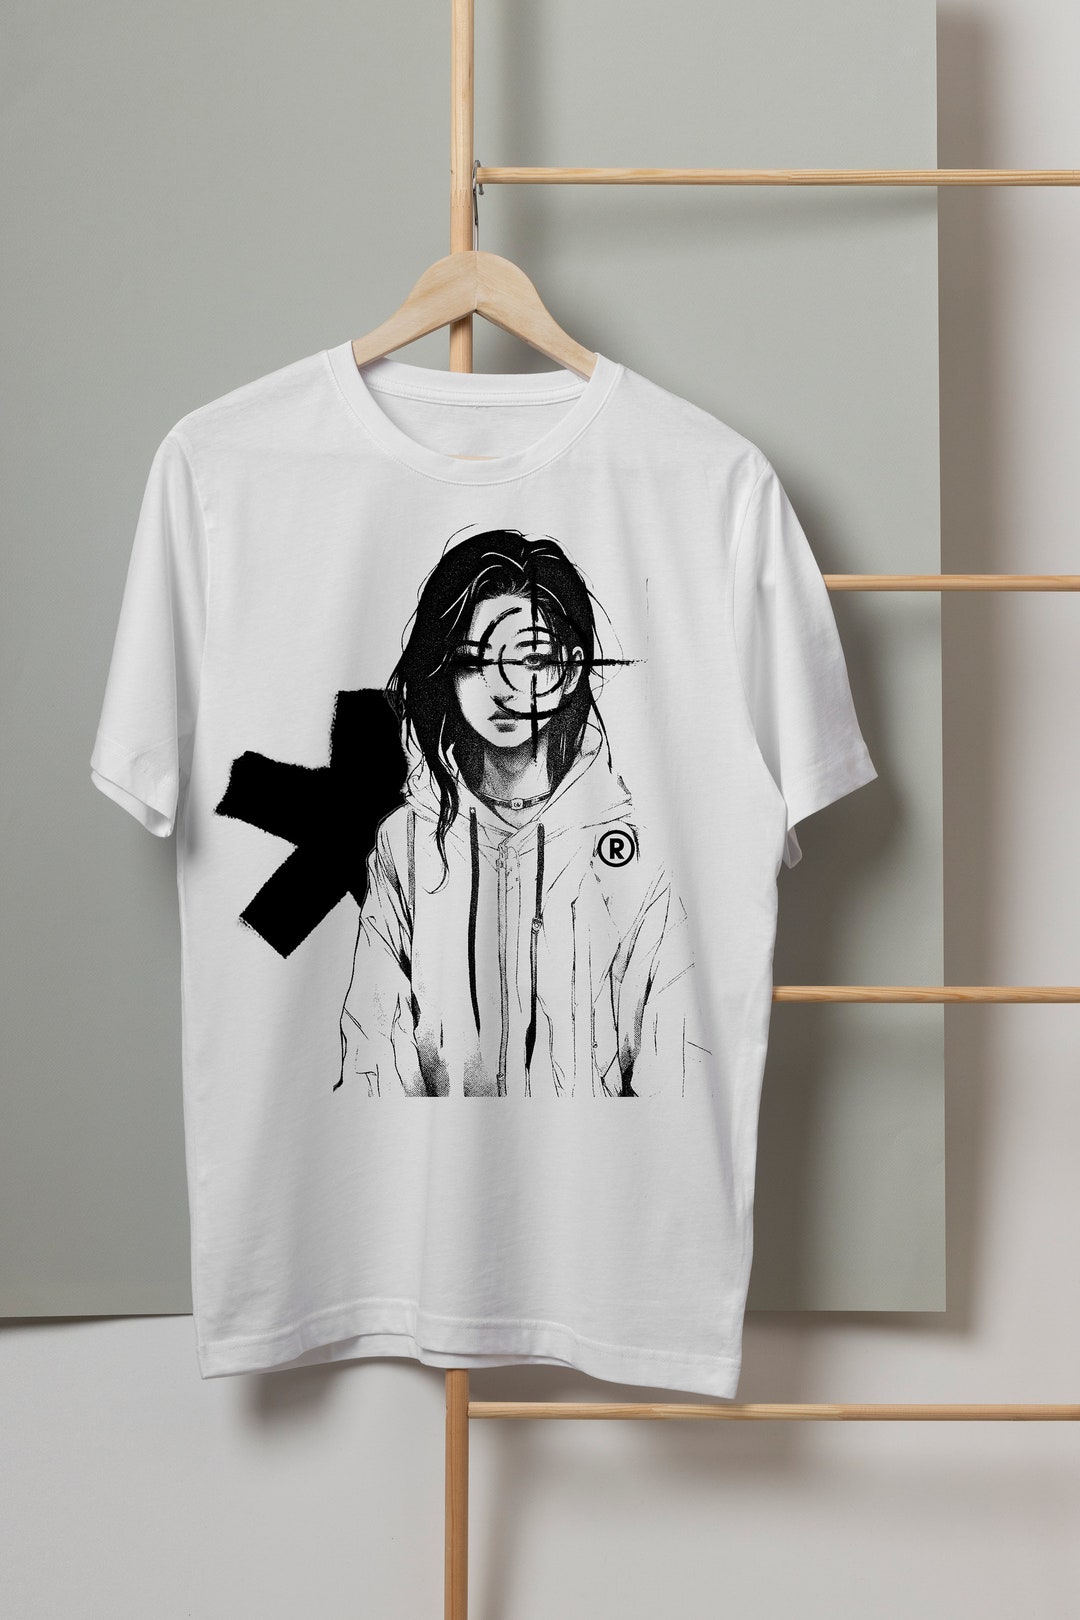 Attitute Opium T-shirt Oversized Anarchy Tee Korean Girl With Attitude ...